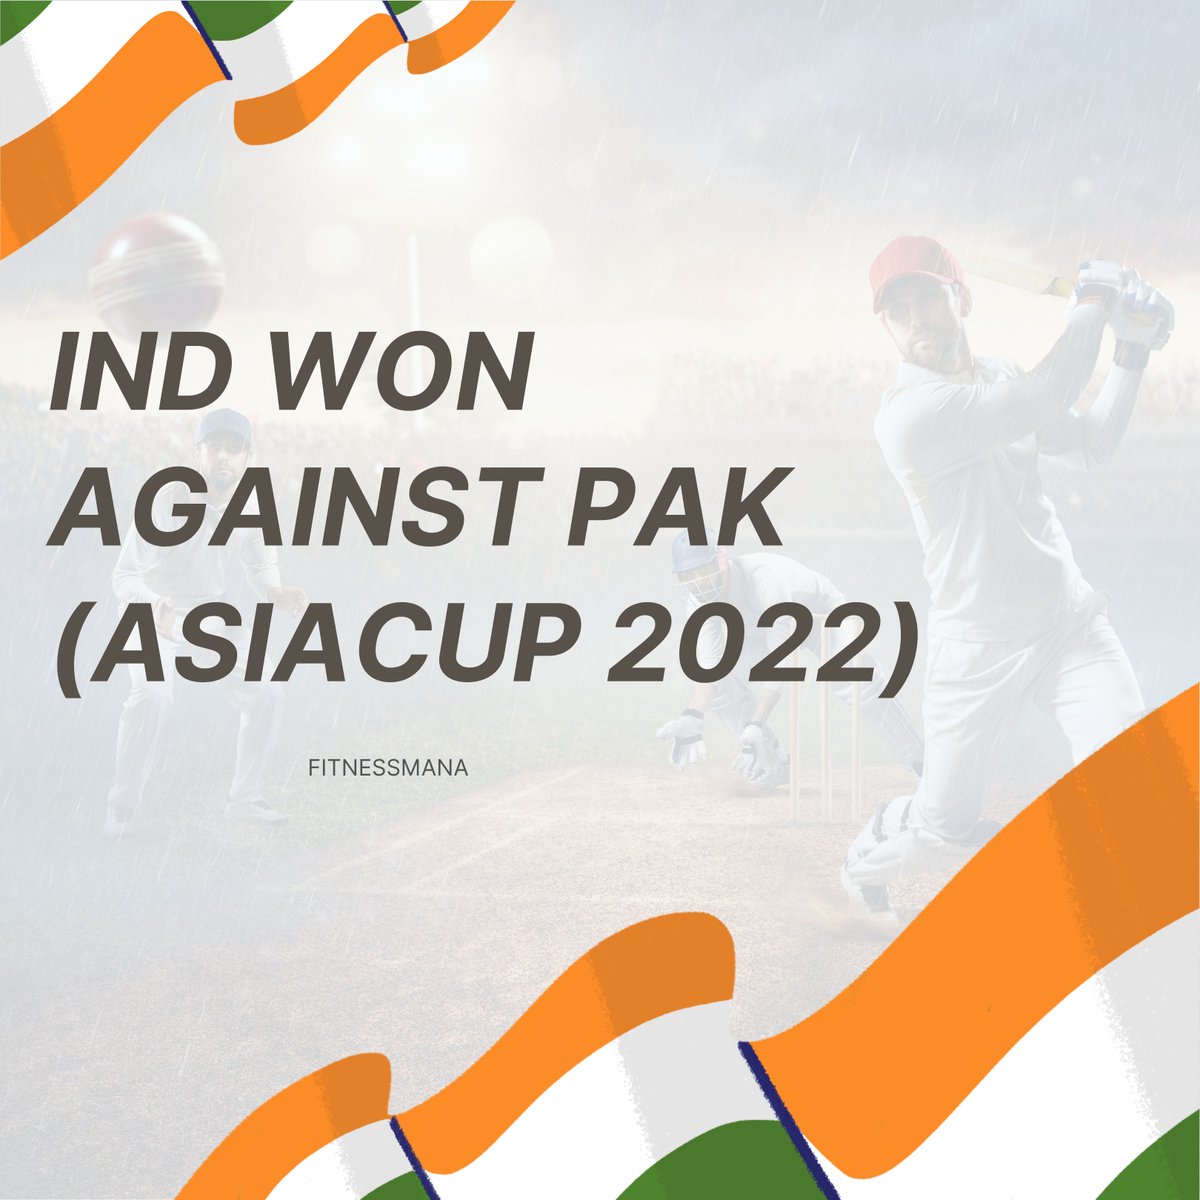 Congratulations🔥 @IndianCricNews 

#Fitnessmana #CelebrateFitness #BabarAzam #Hardik #INDvsPAK #Cricket #BaapBaapHotaHai #AsiaCup2022 #IndiaWins #TeamIndia #Winners #Kohli